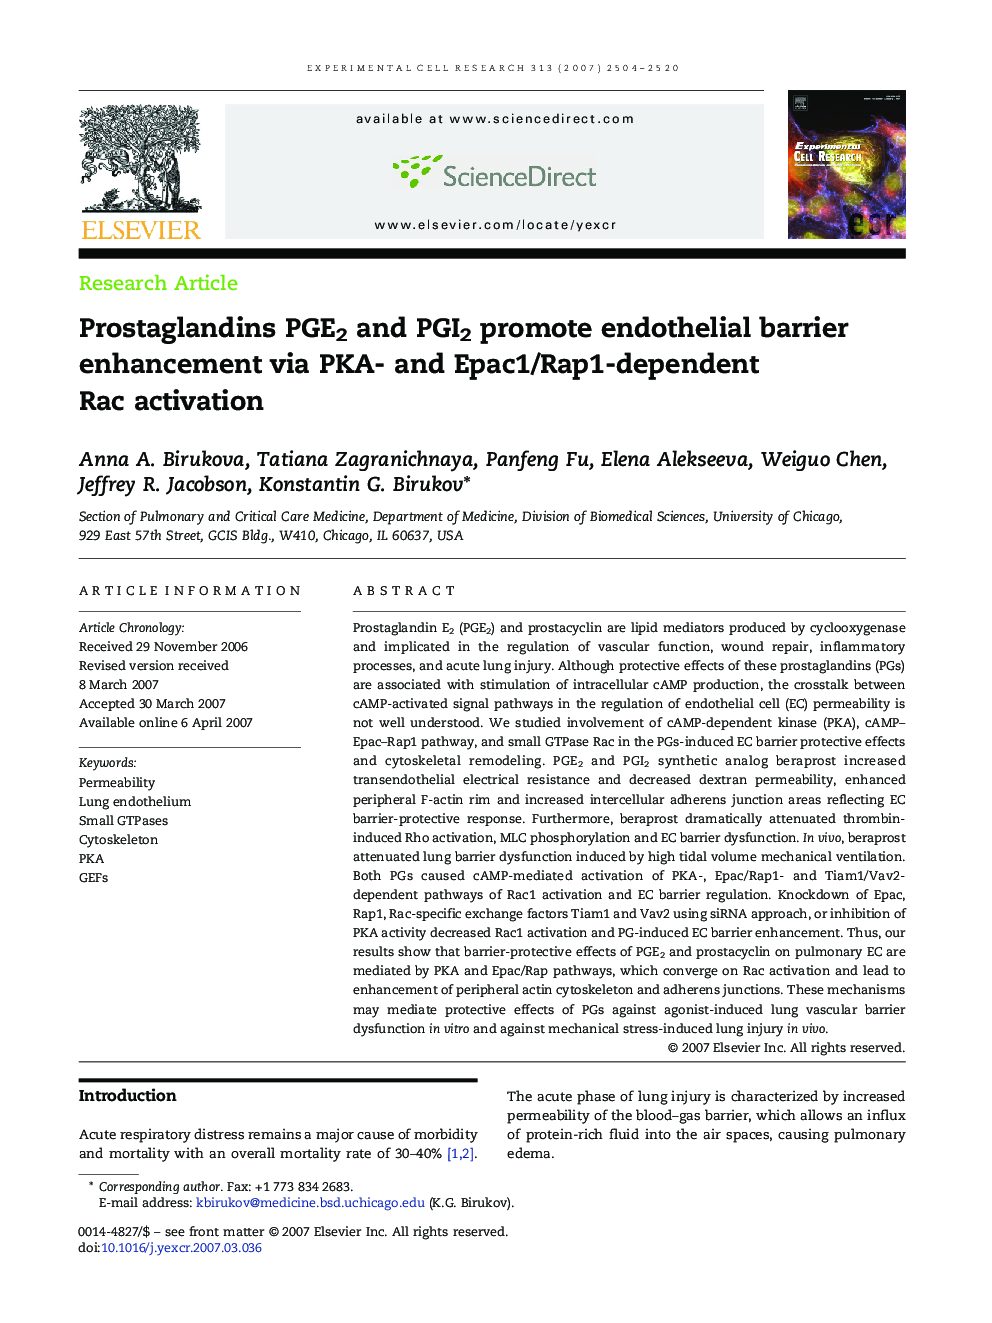 Prostaglandins PGE2 and PGI2 promote endothelial barrier enhancement via PKA- and Epac1/Rap1-dependent Rac activation